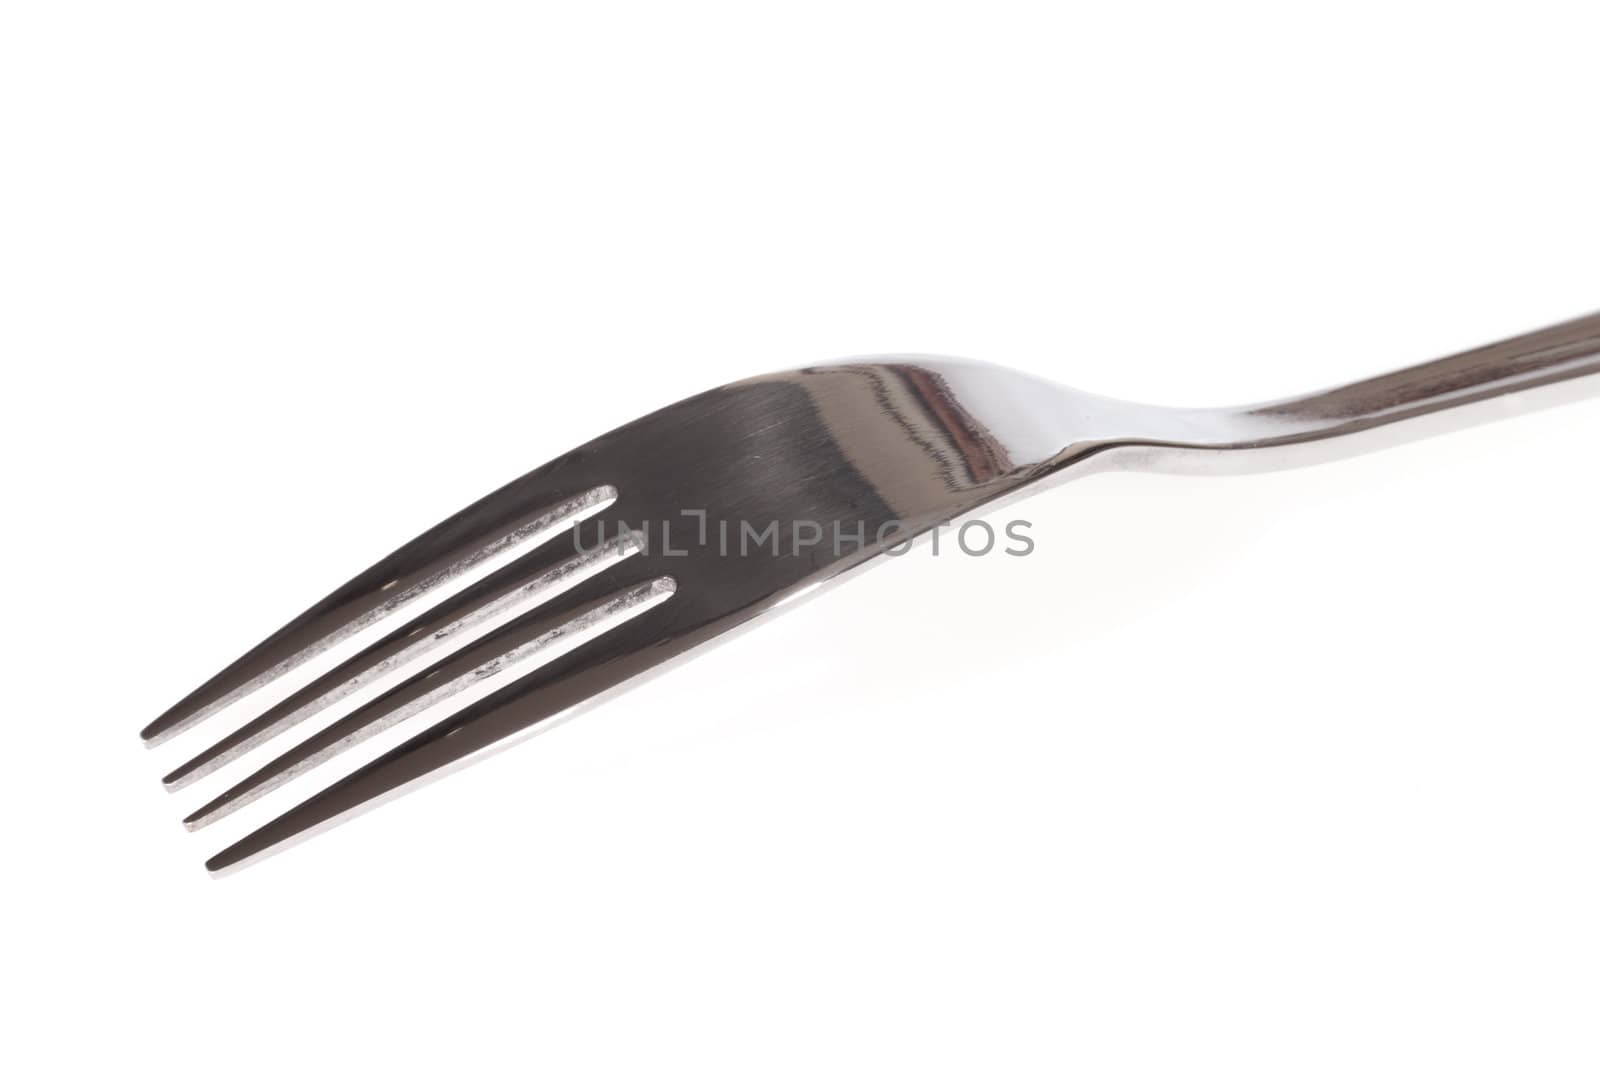 one fork by aguirre_mar